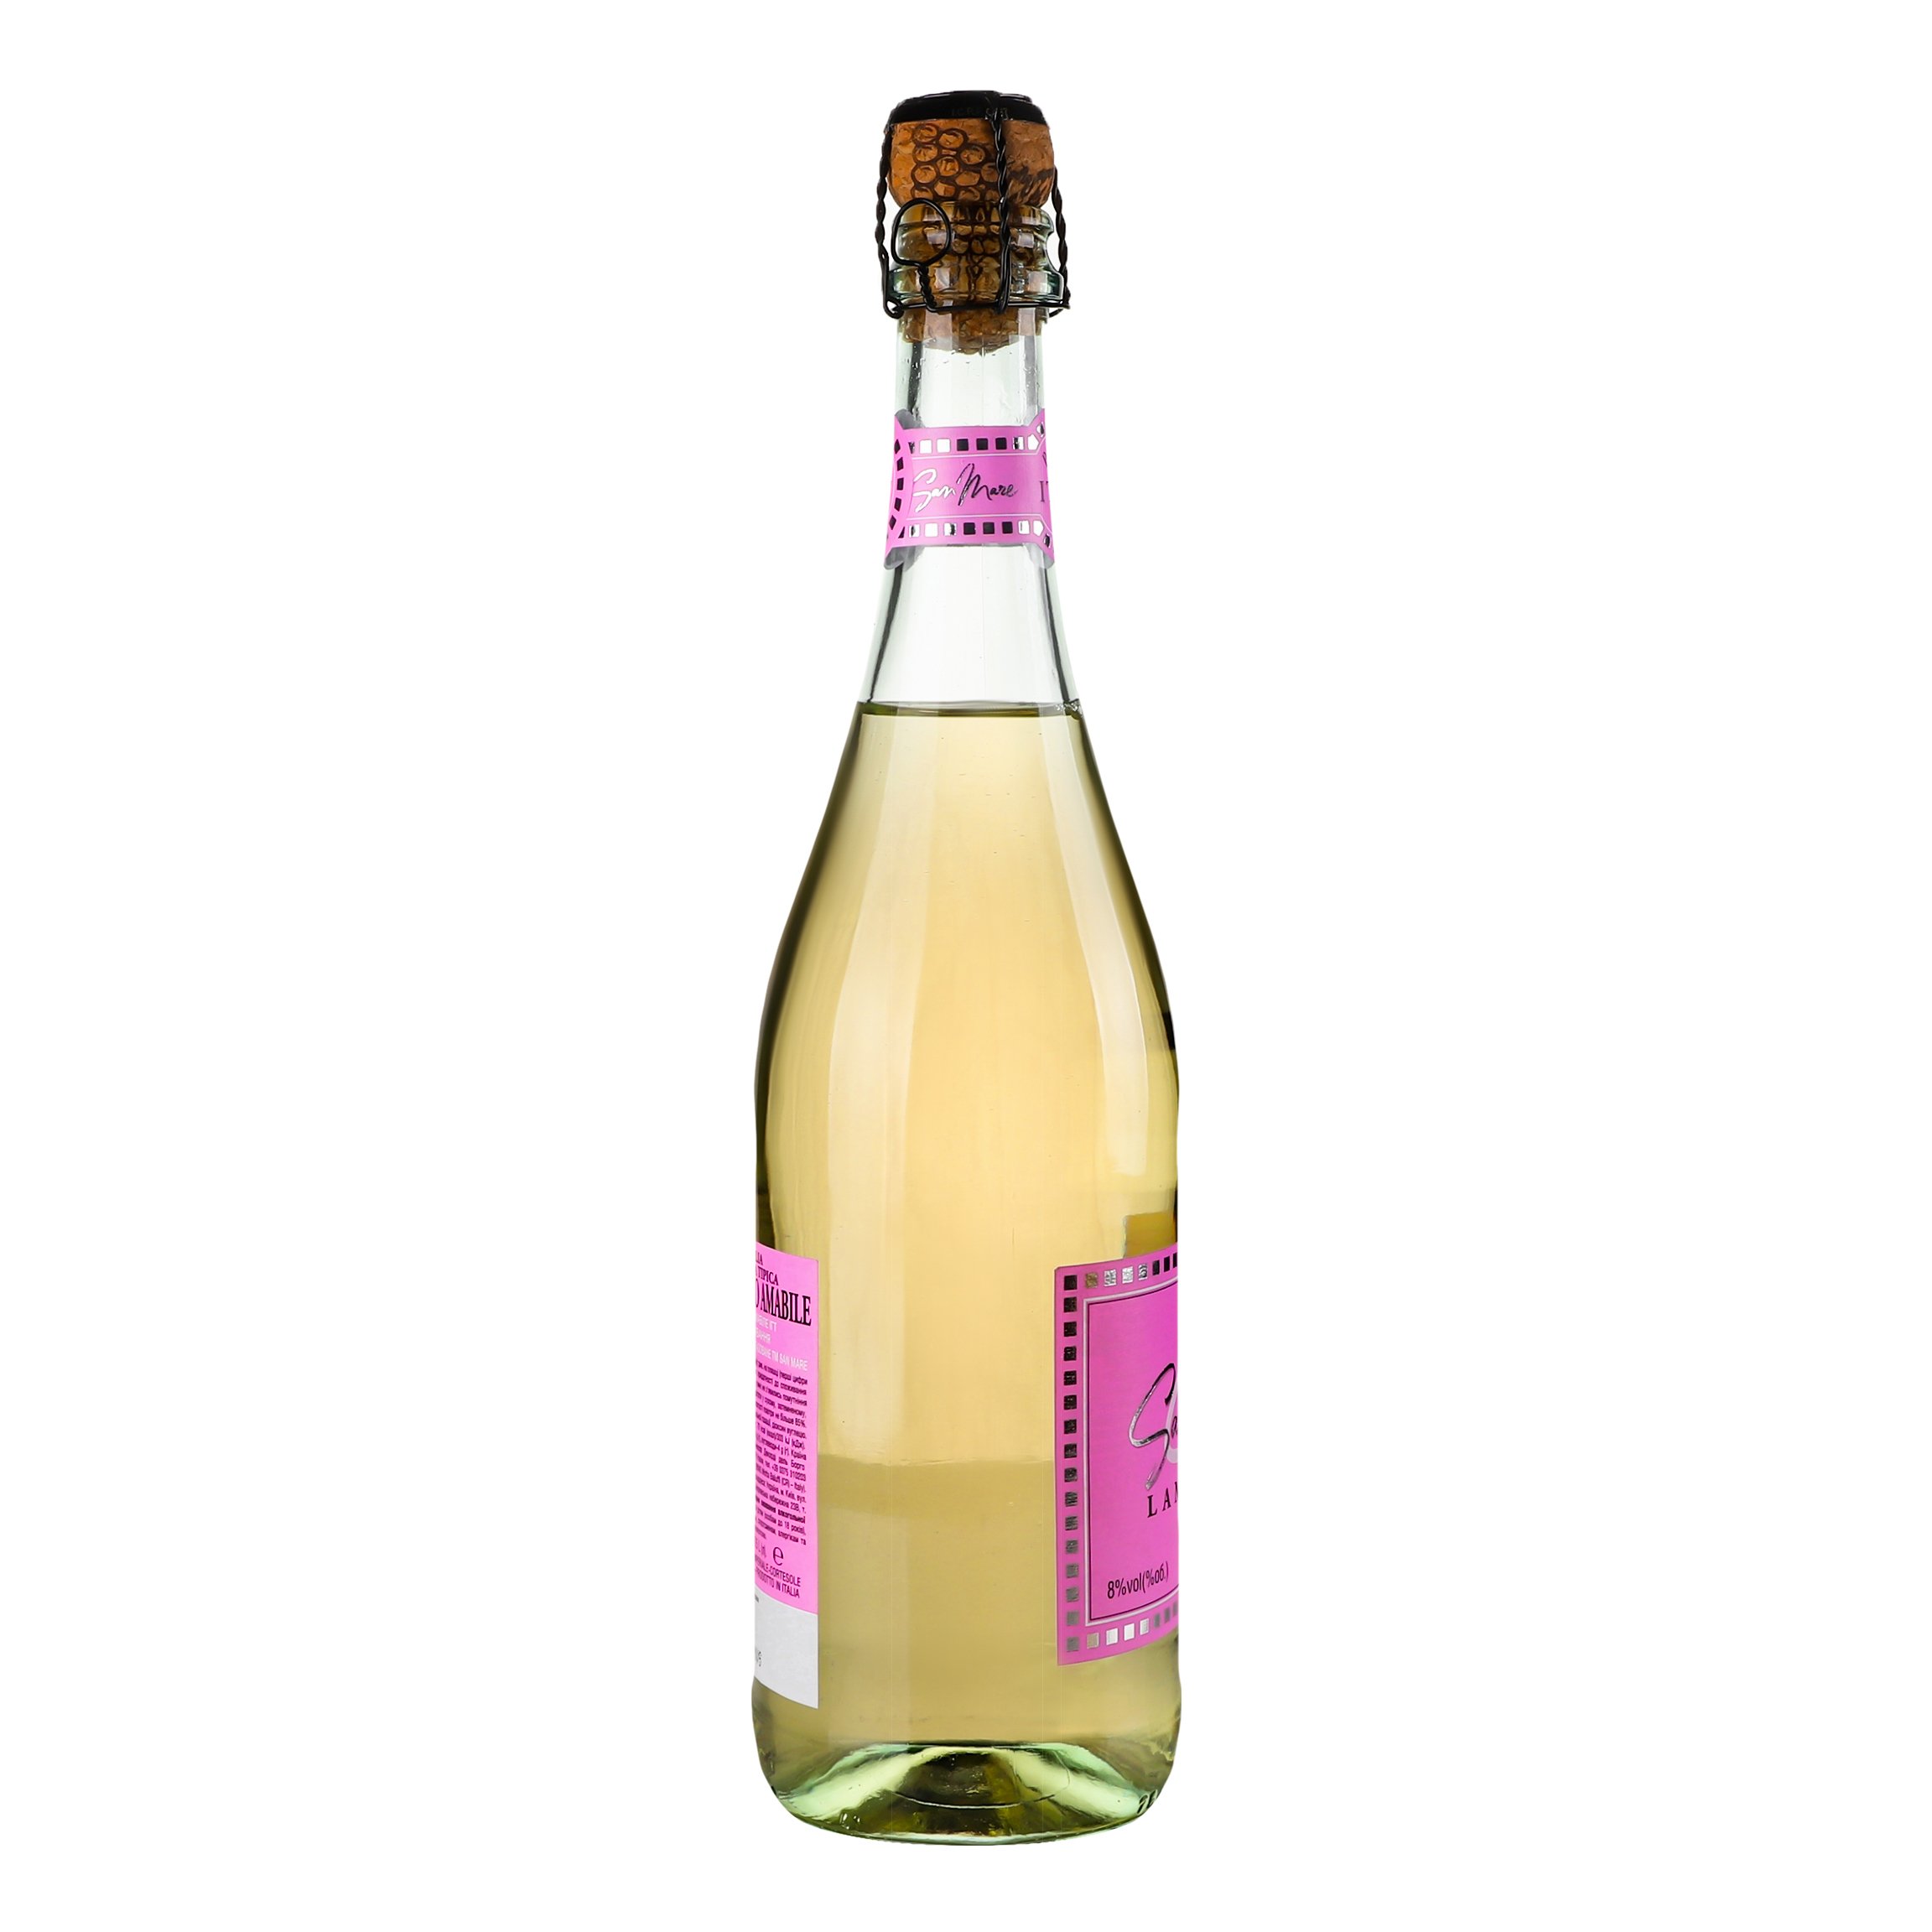 Вино игристое San Mare Lambrusco dell'Emilia Bianco, белое полусладкое, 8%, 0,75 л - фото 3